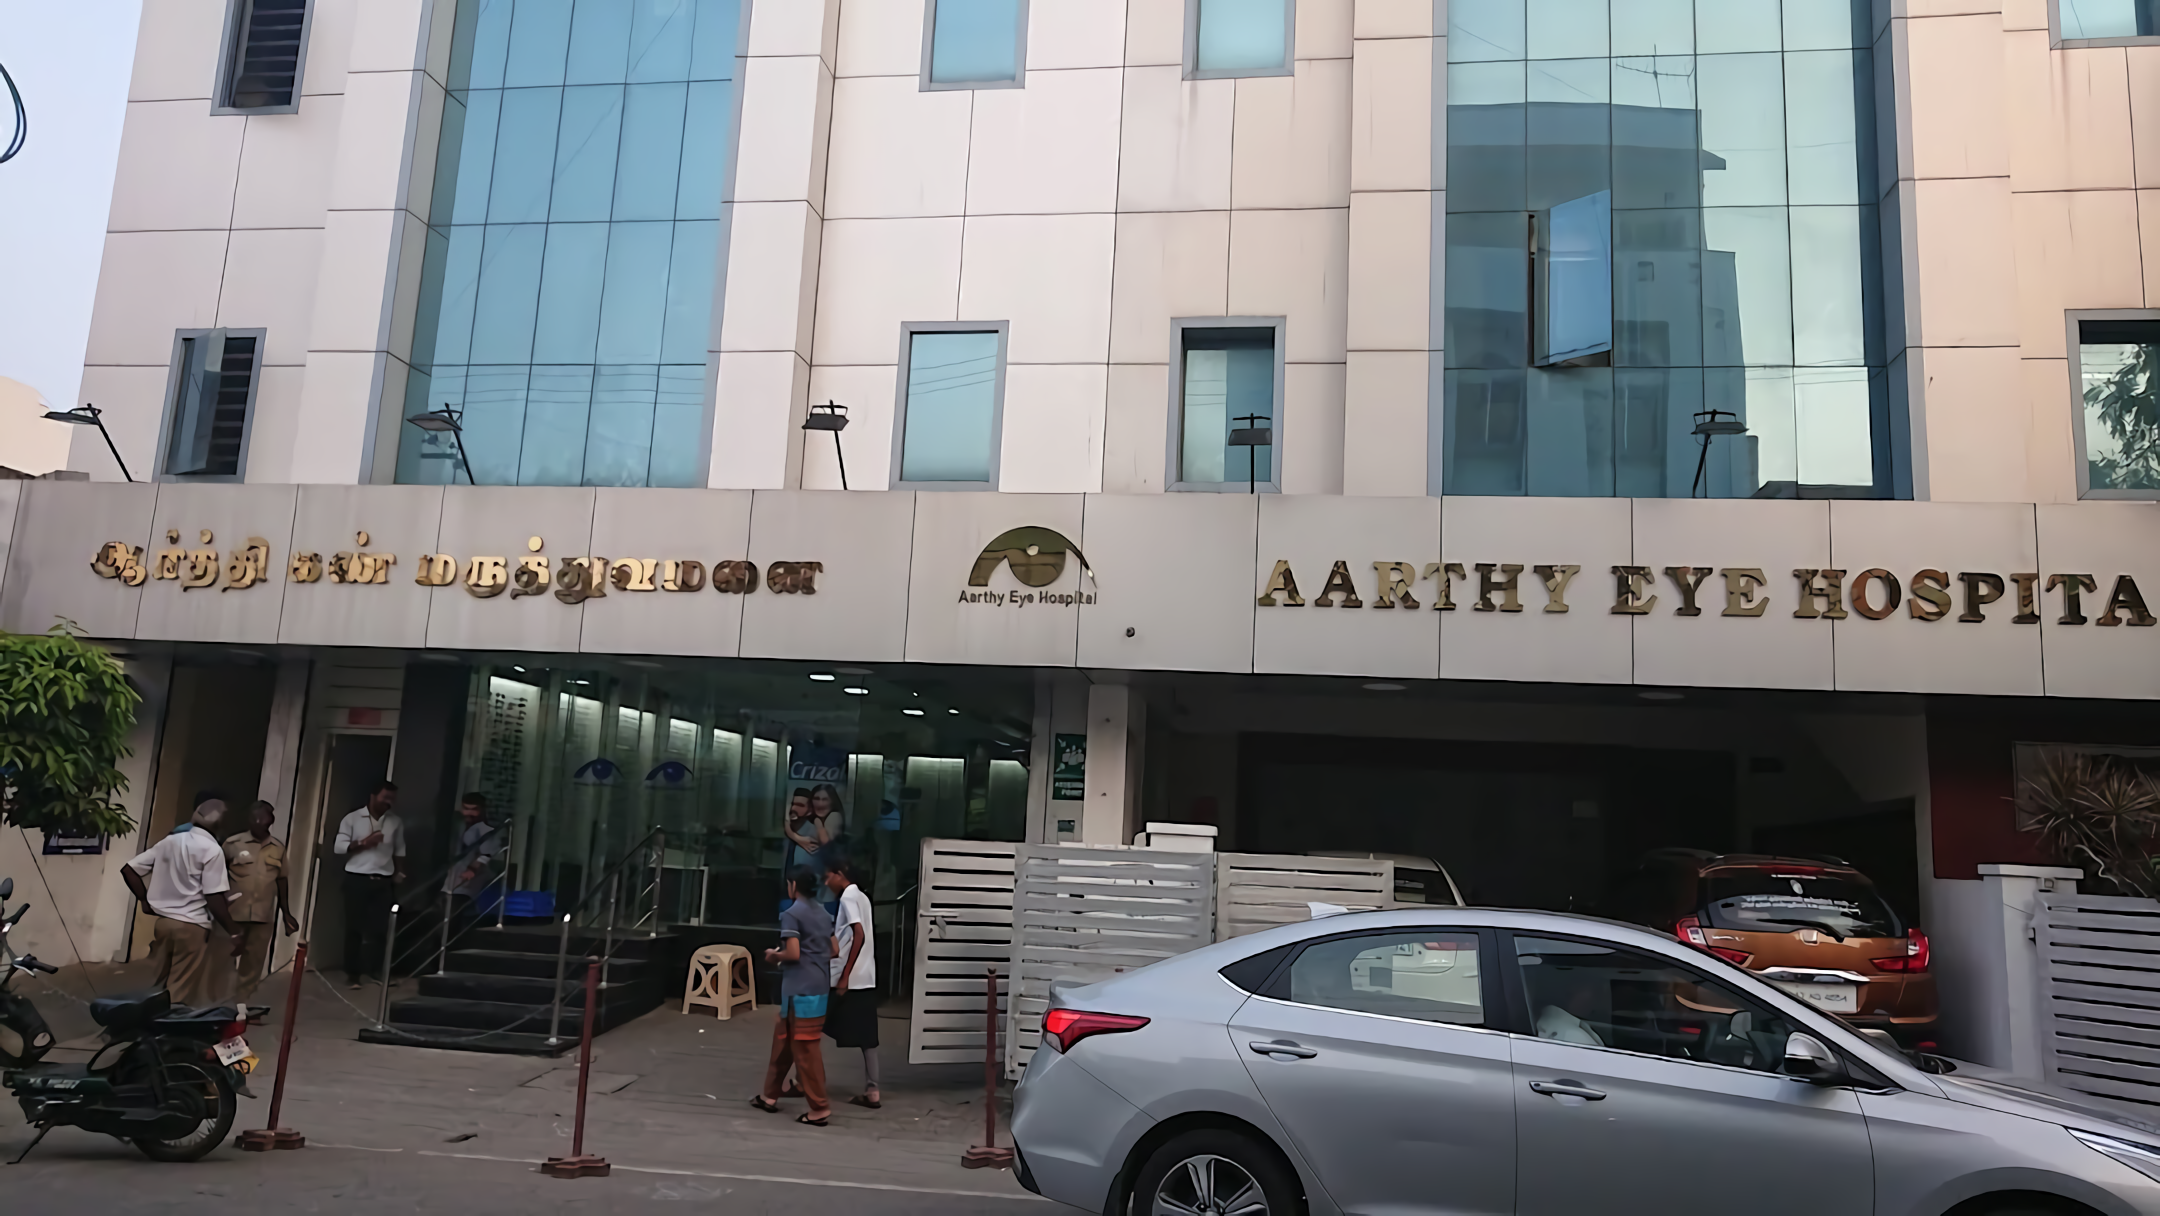 Aarthy Eye Hospital